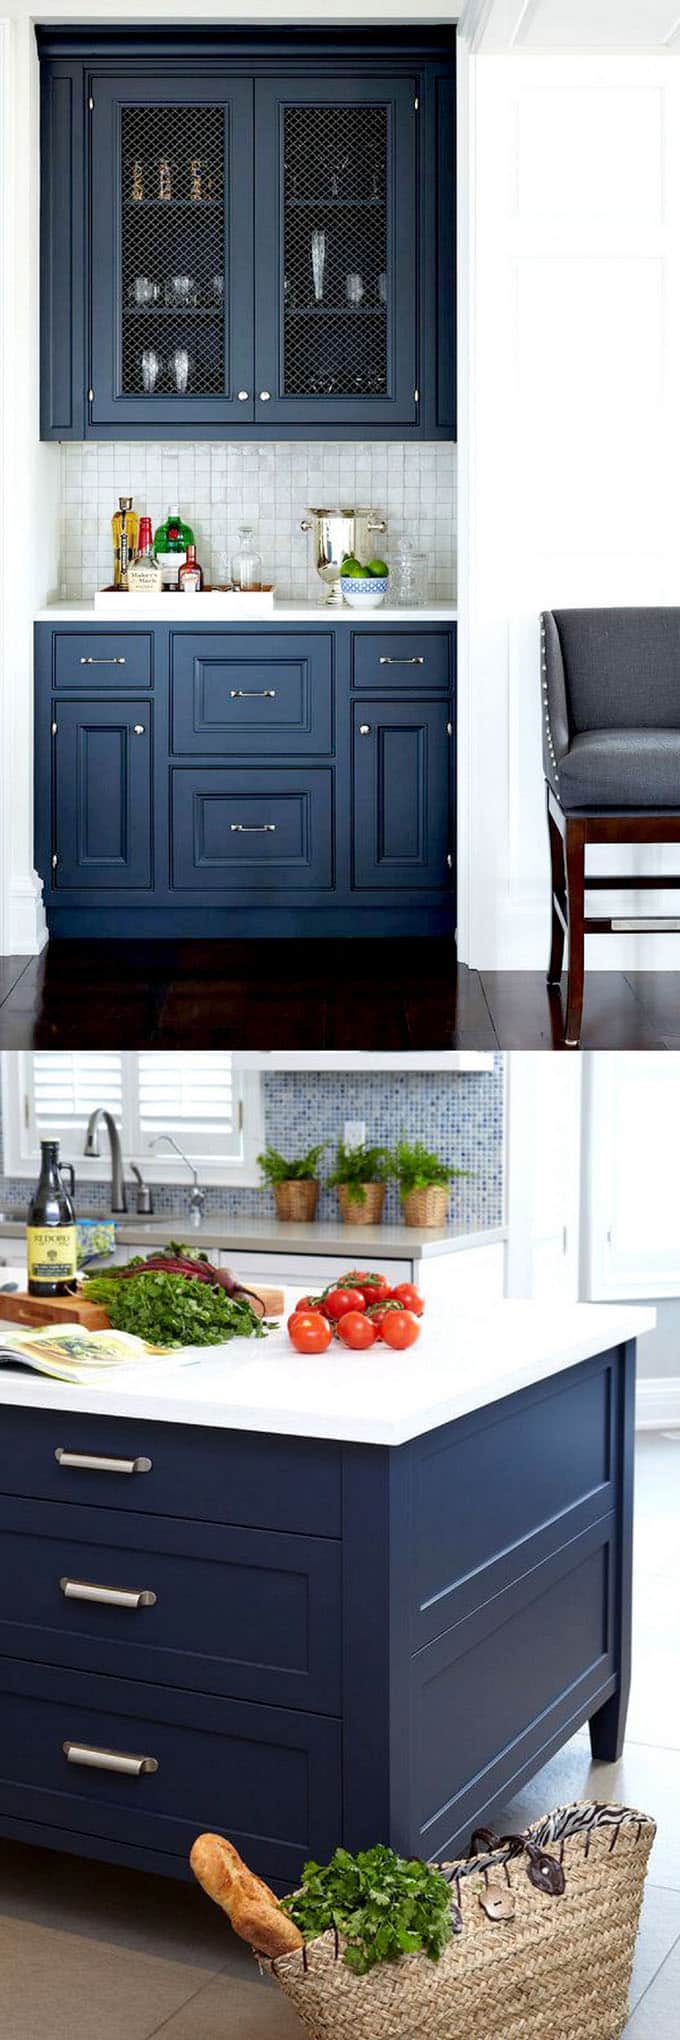 25-beautiful-paint-colors-for-kitchen-cabinets-apieceofrainbowblog (13)